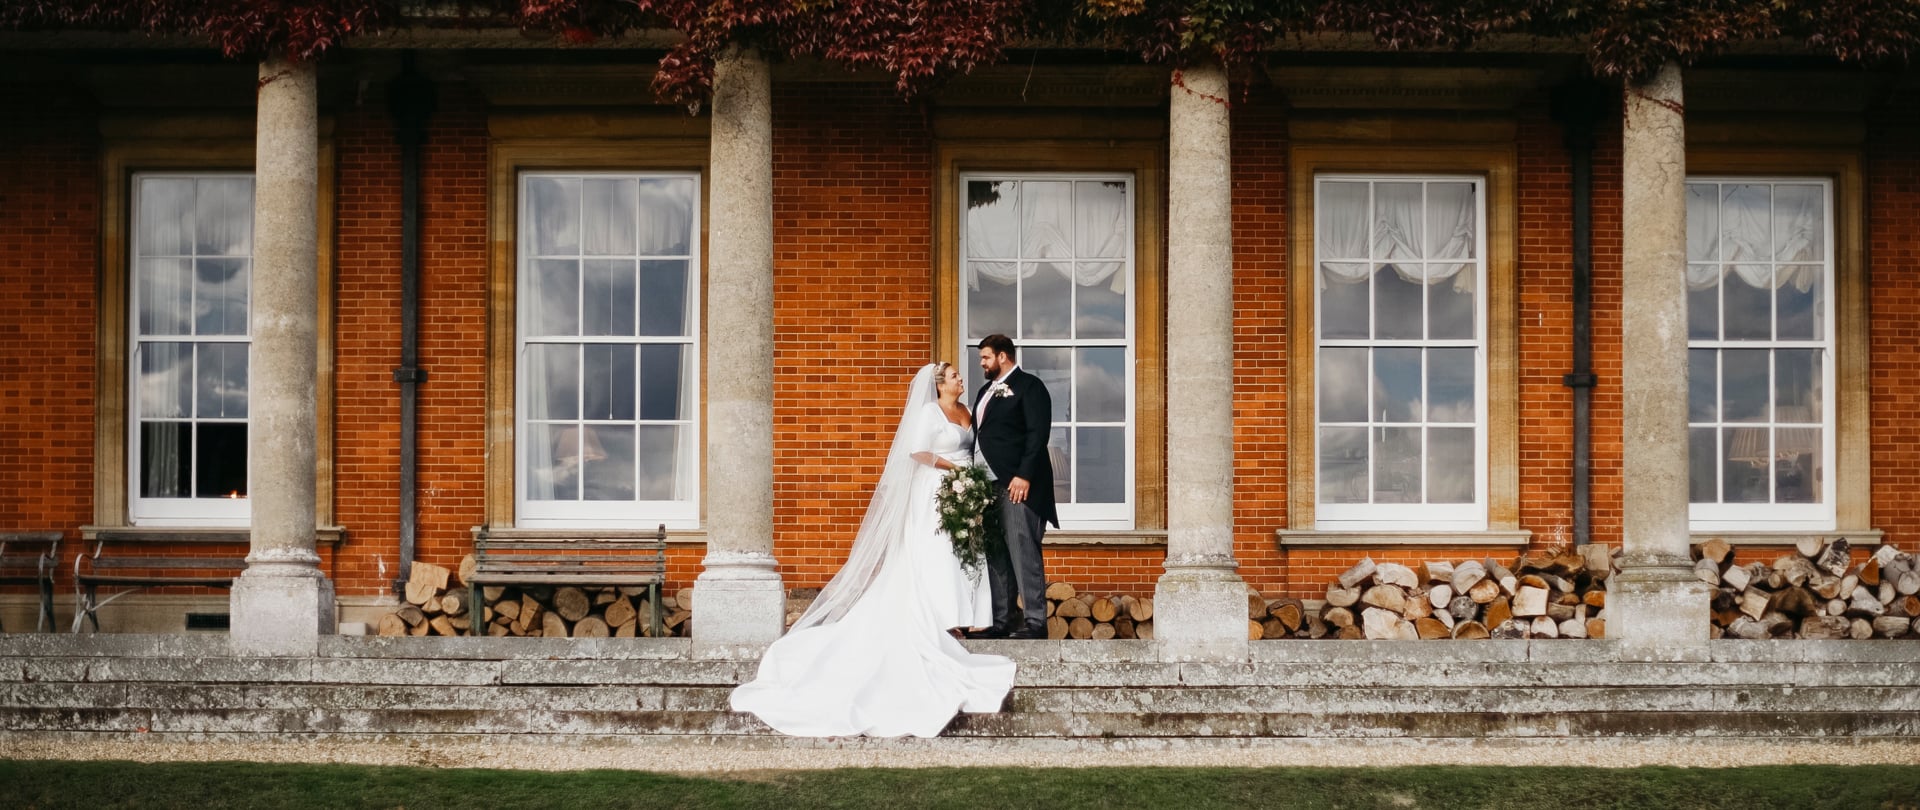 Harriette & Ed Wedding Video Filmed at Norfolk, England